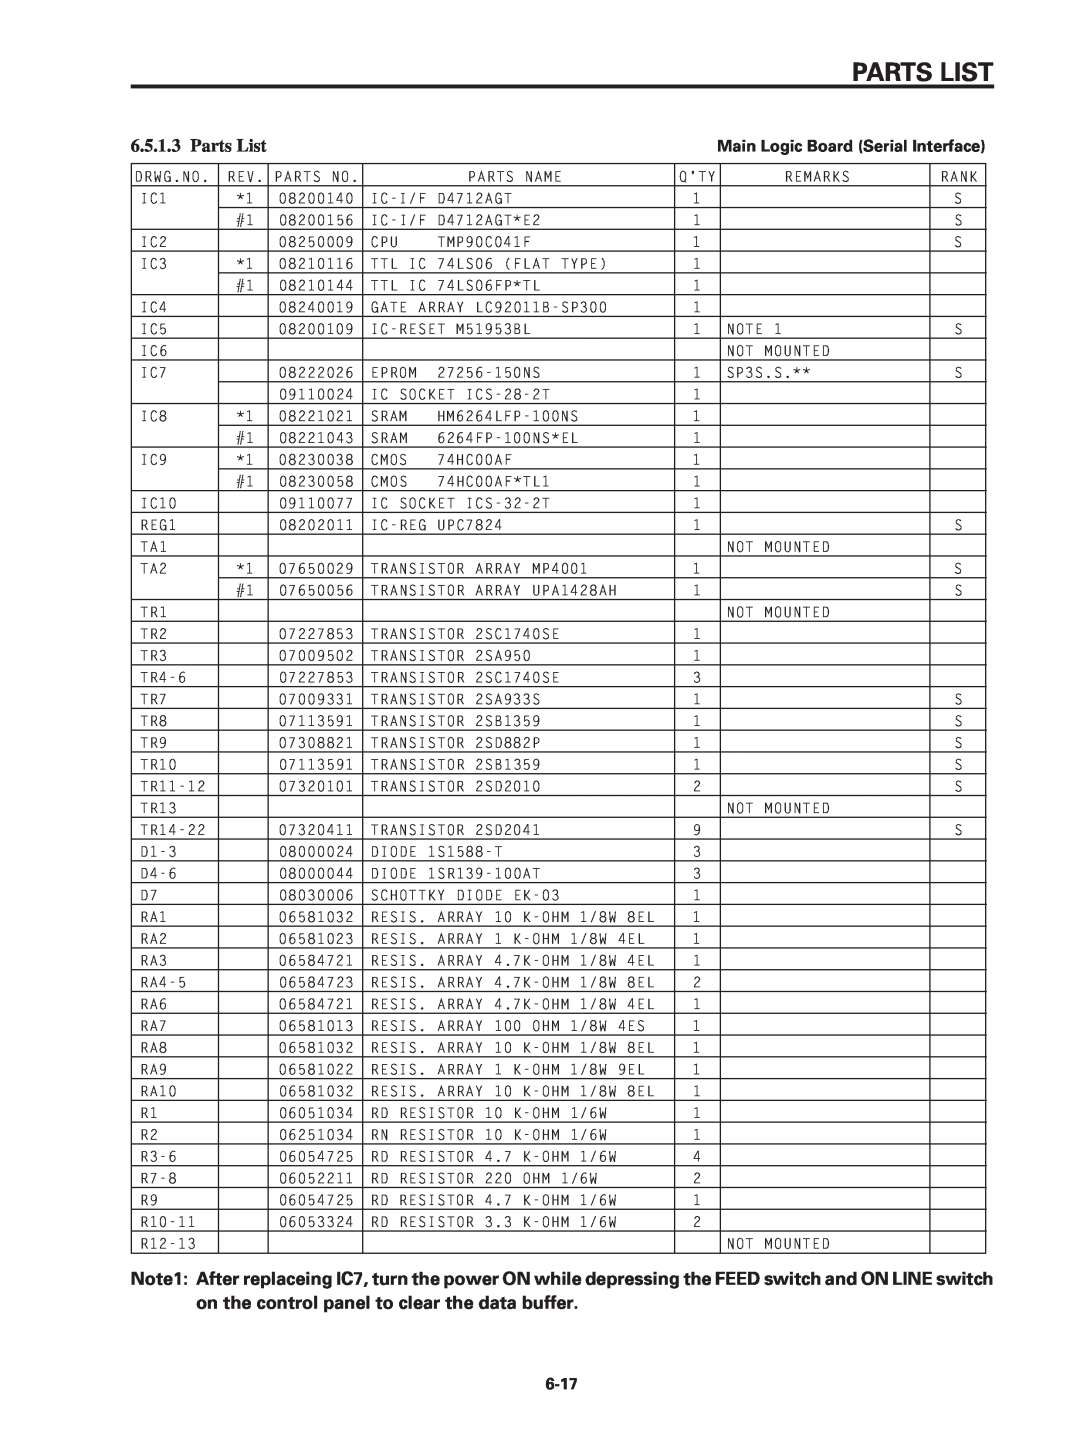 Star Micronics SP320S technical manual Parts List, Main Logic Board Serial Interface, 6-17 